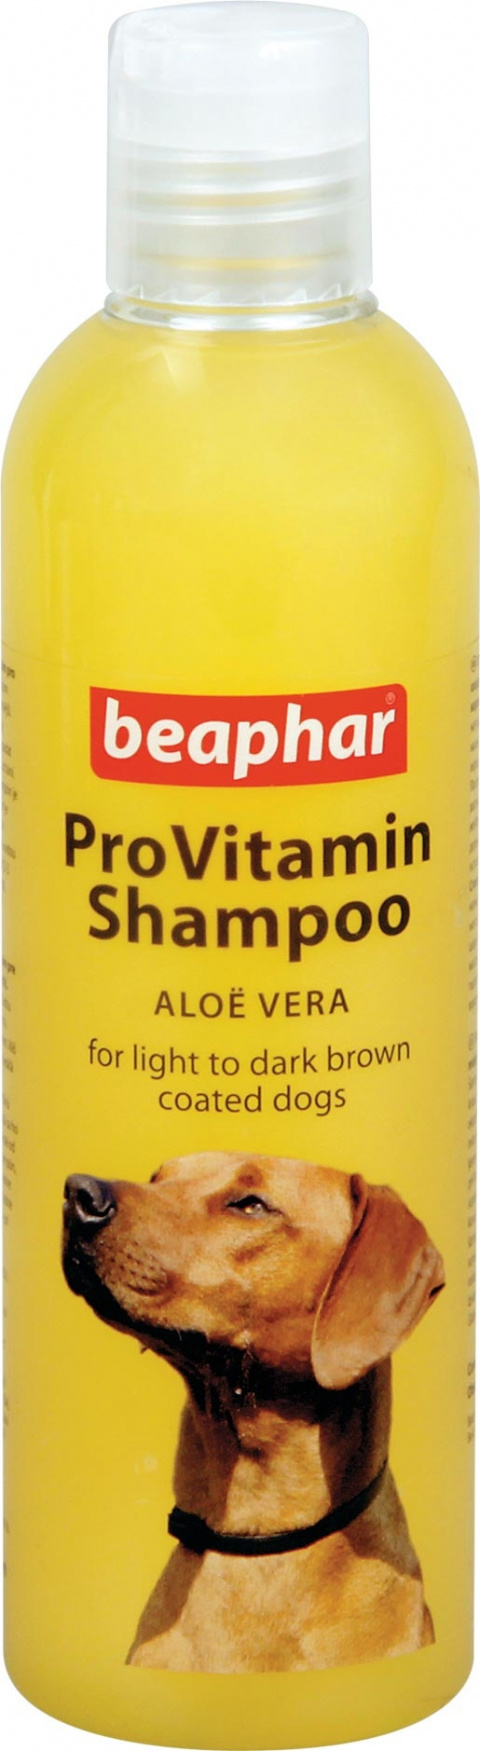 BEAPHAR PROVITAMIN SHAMPOO - ALOE VERA FOR LIGHT TO DARK BROWN COATED DOGS - 250ml